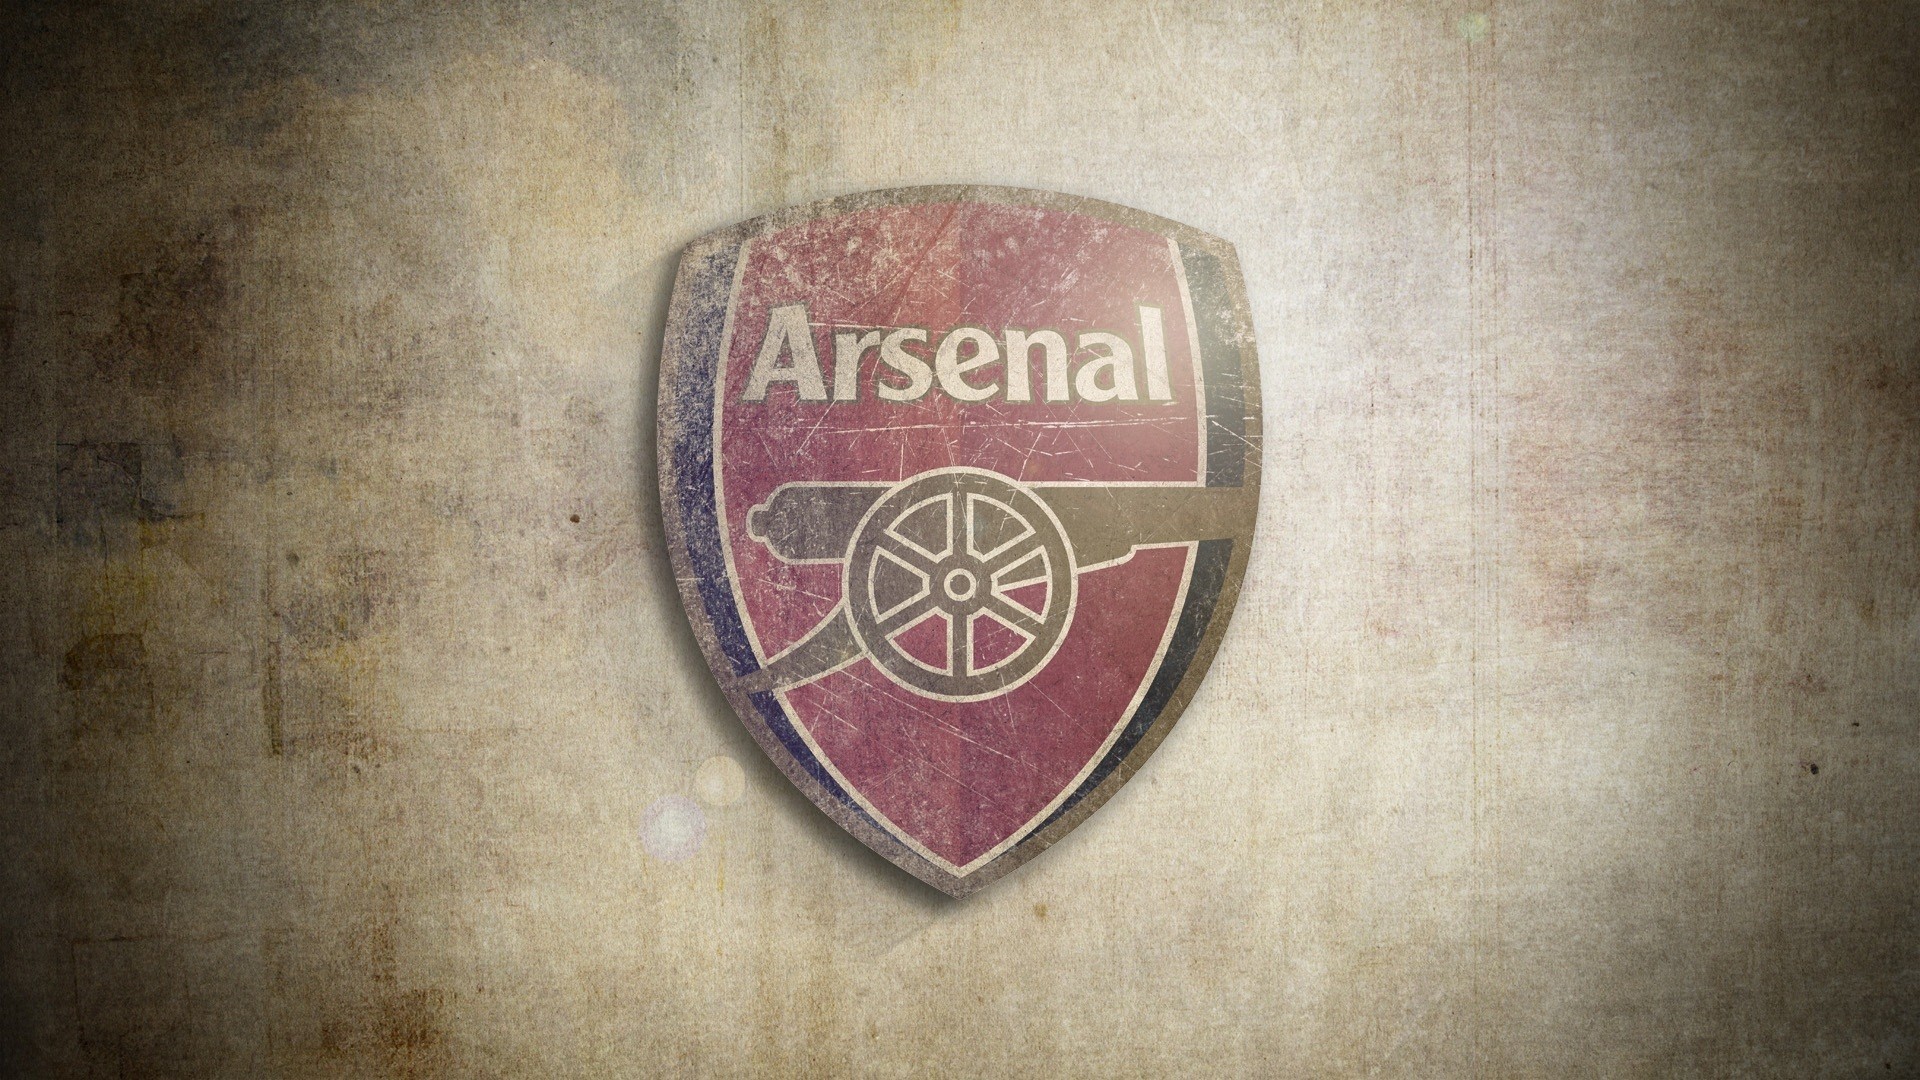 General 1920x1080 Arsenal FC sport soccer soccer clubs grunge Premier League British digital art simple background logo